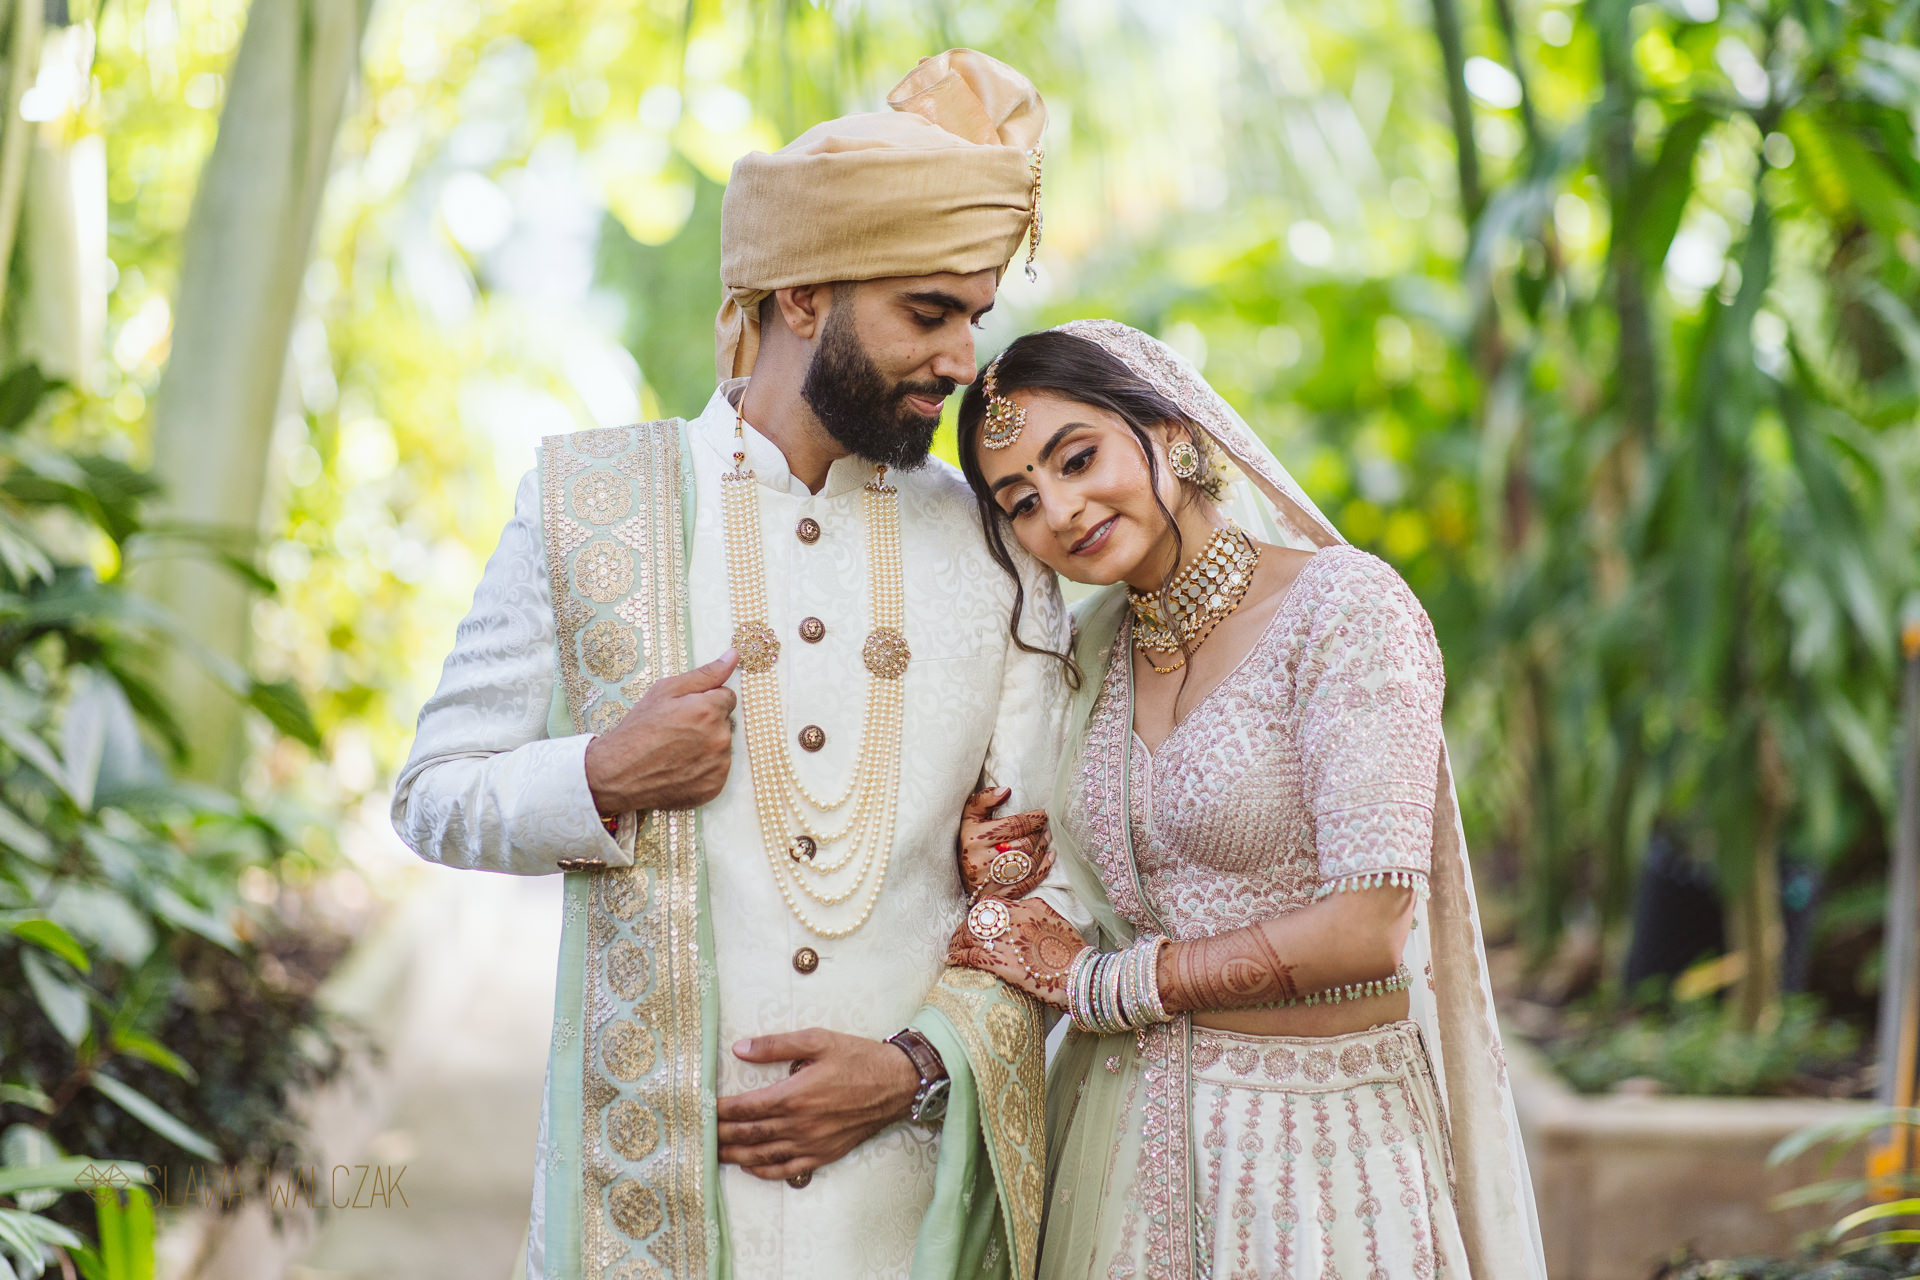 Hindu Couple Photoshoot at Kew Gardens London